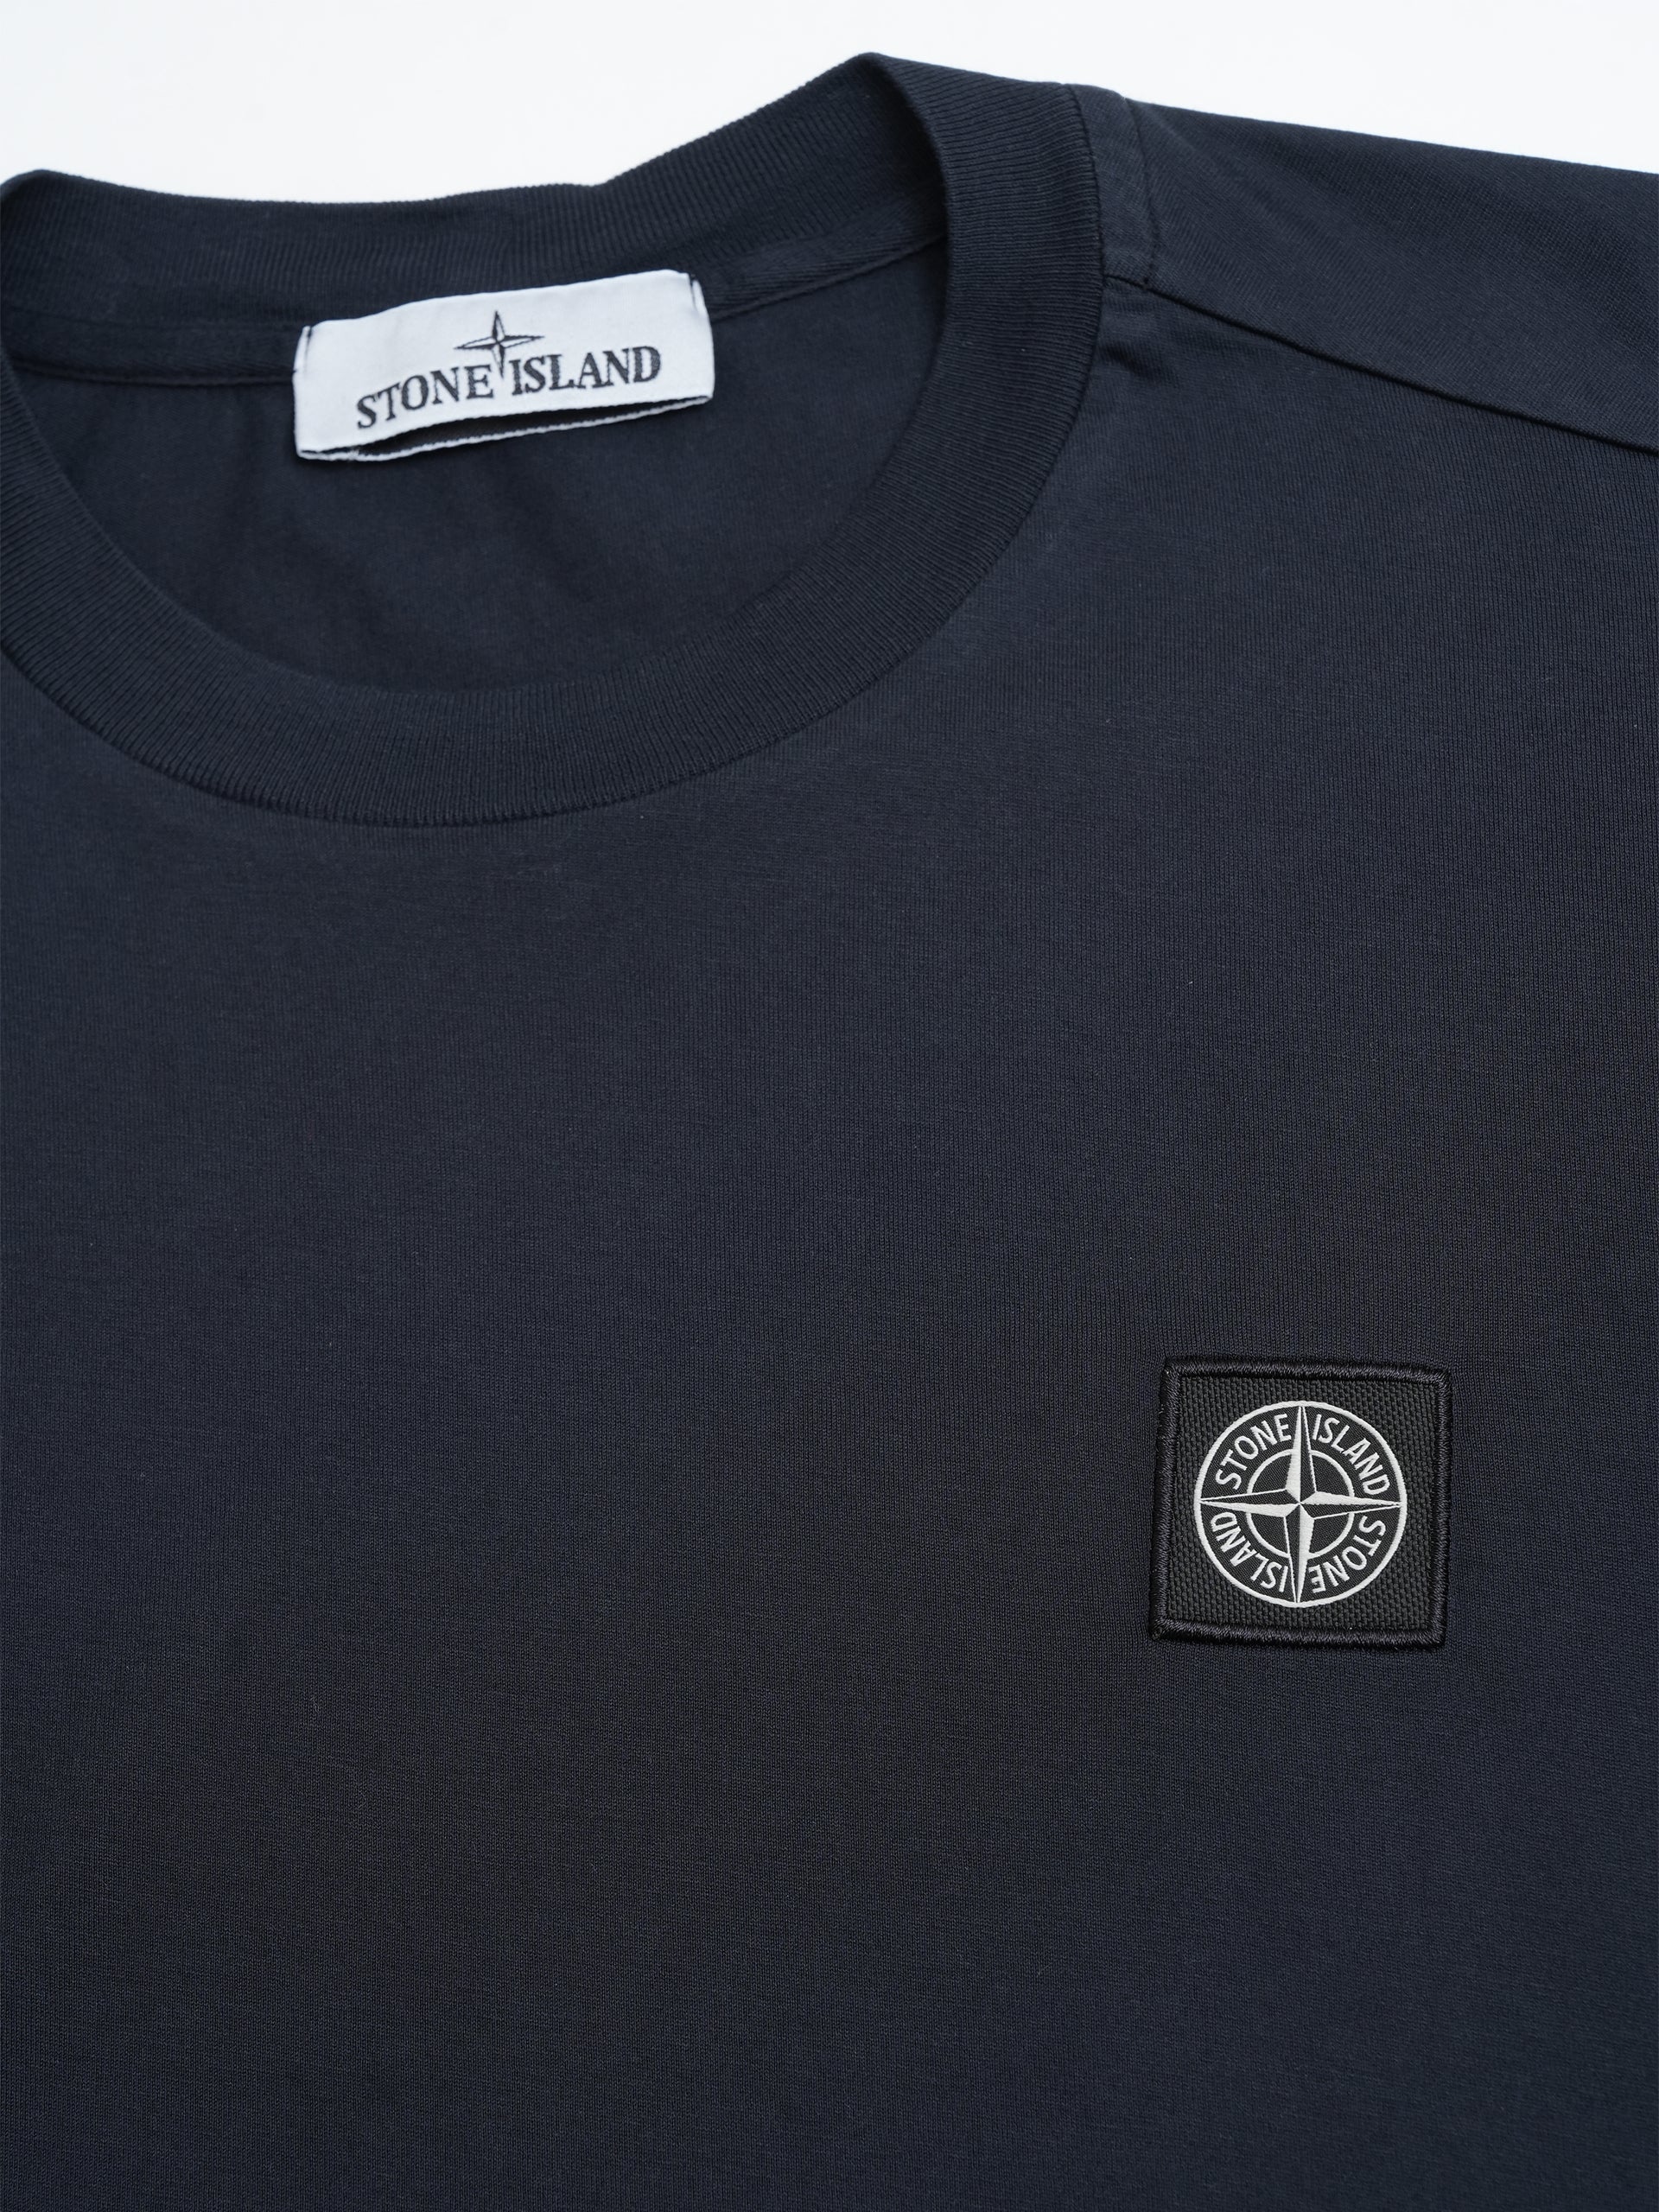 STONE ISLAND - T-Shirt mit Kompass-Patch Dunkelblau – Dark blue